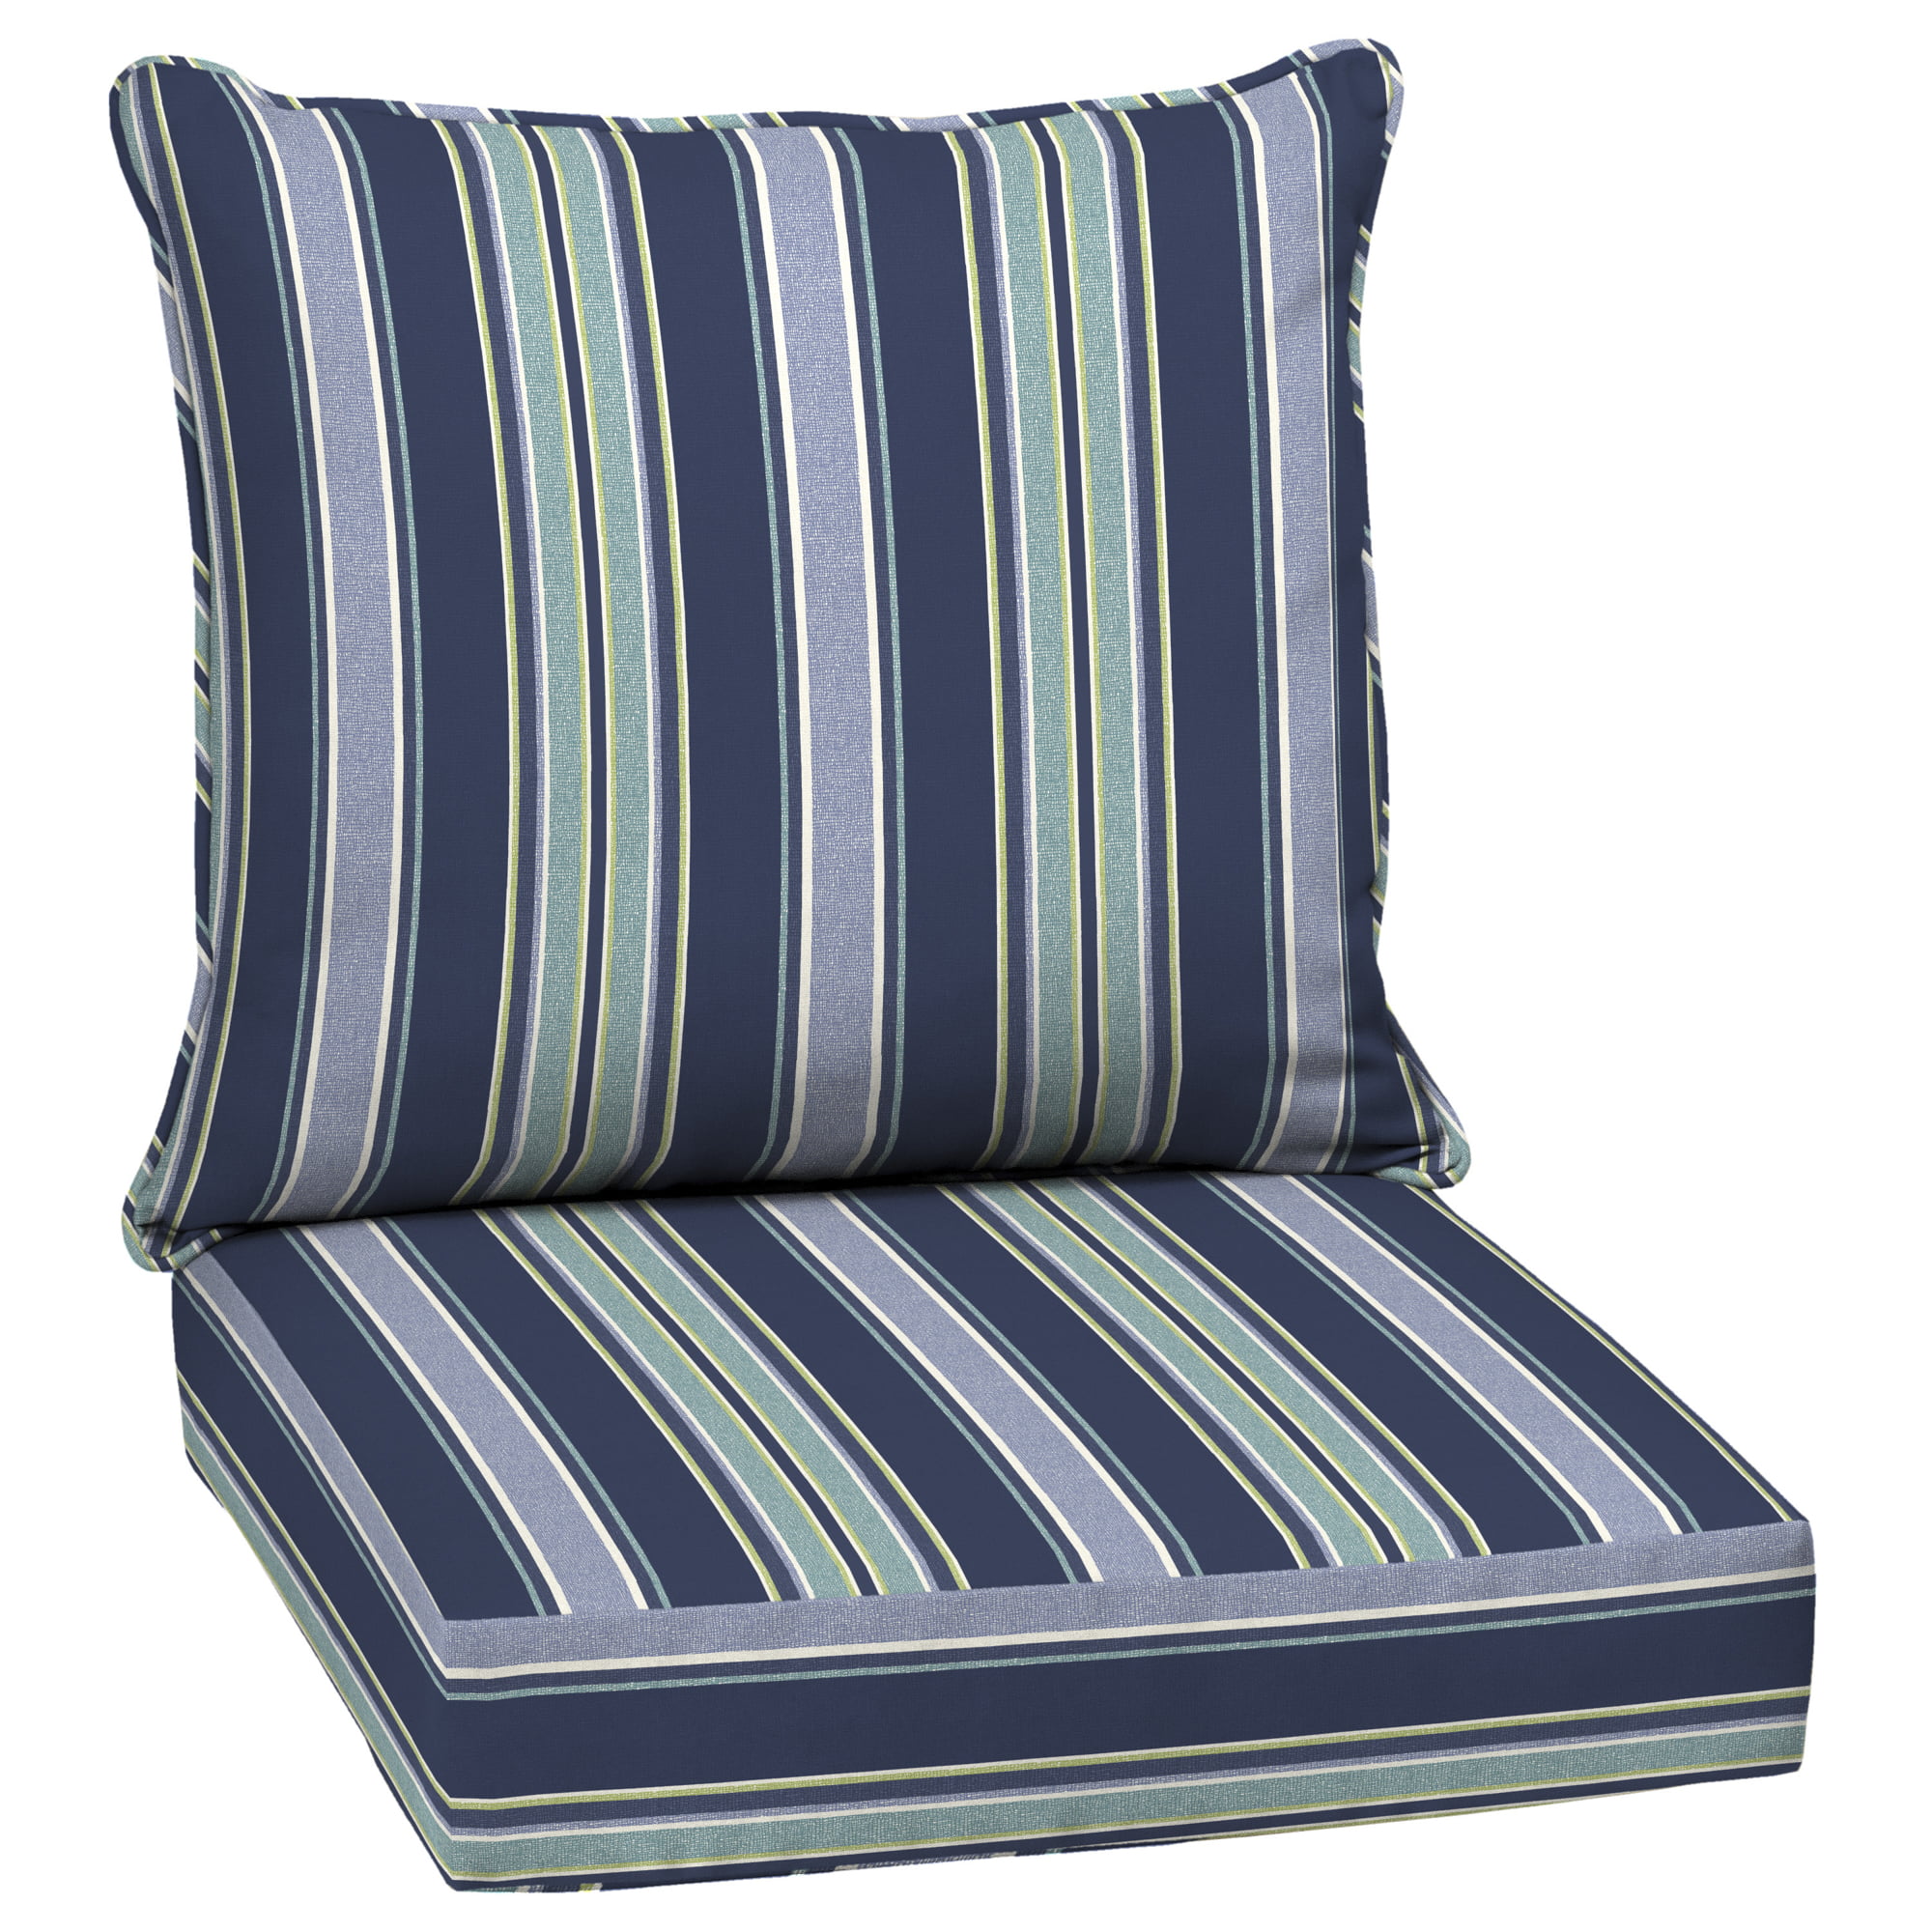 Arden Selections Sapphire Aurora Stripe 24 x 24 in. Outdoor Deep Seat